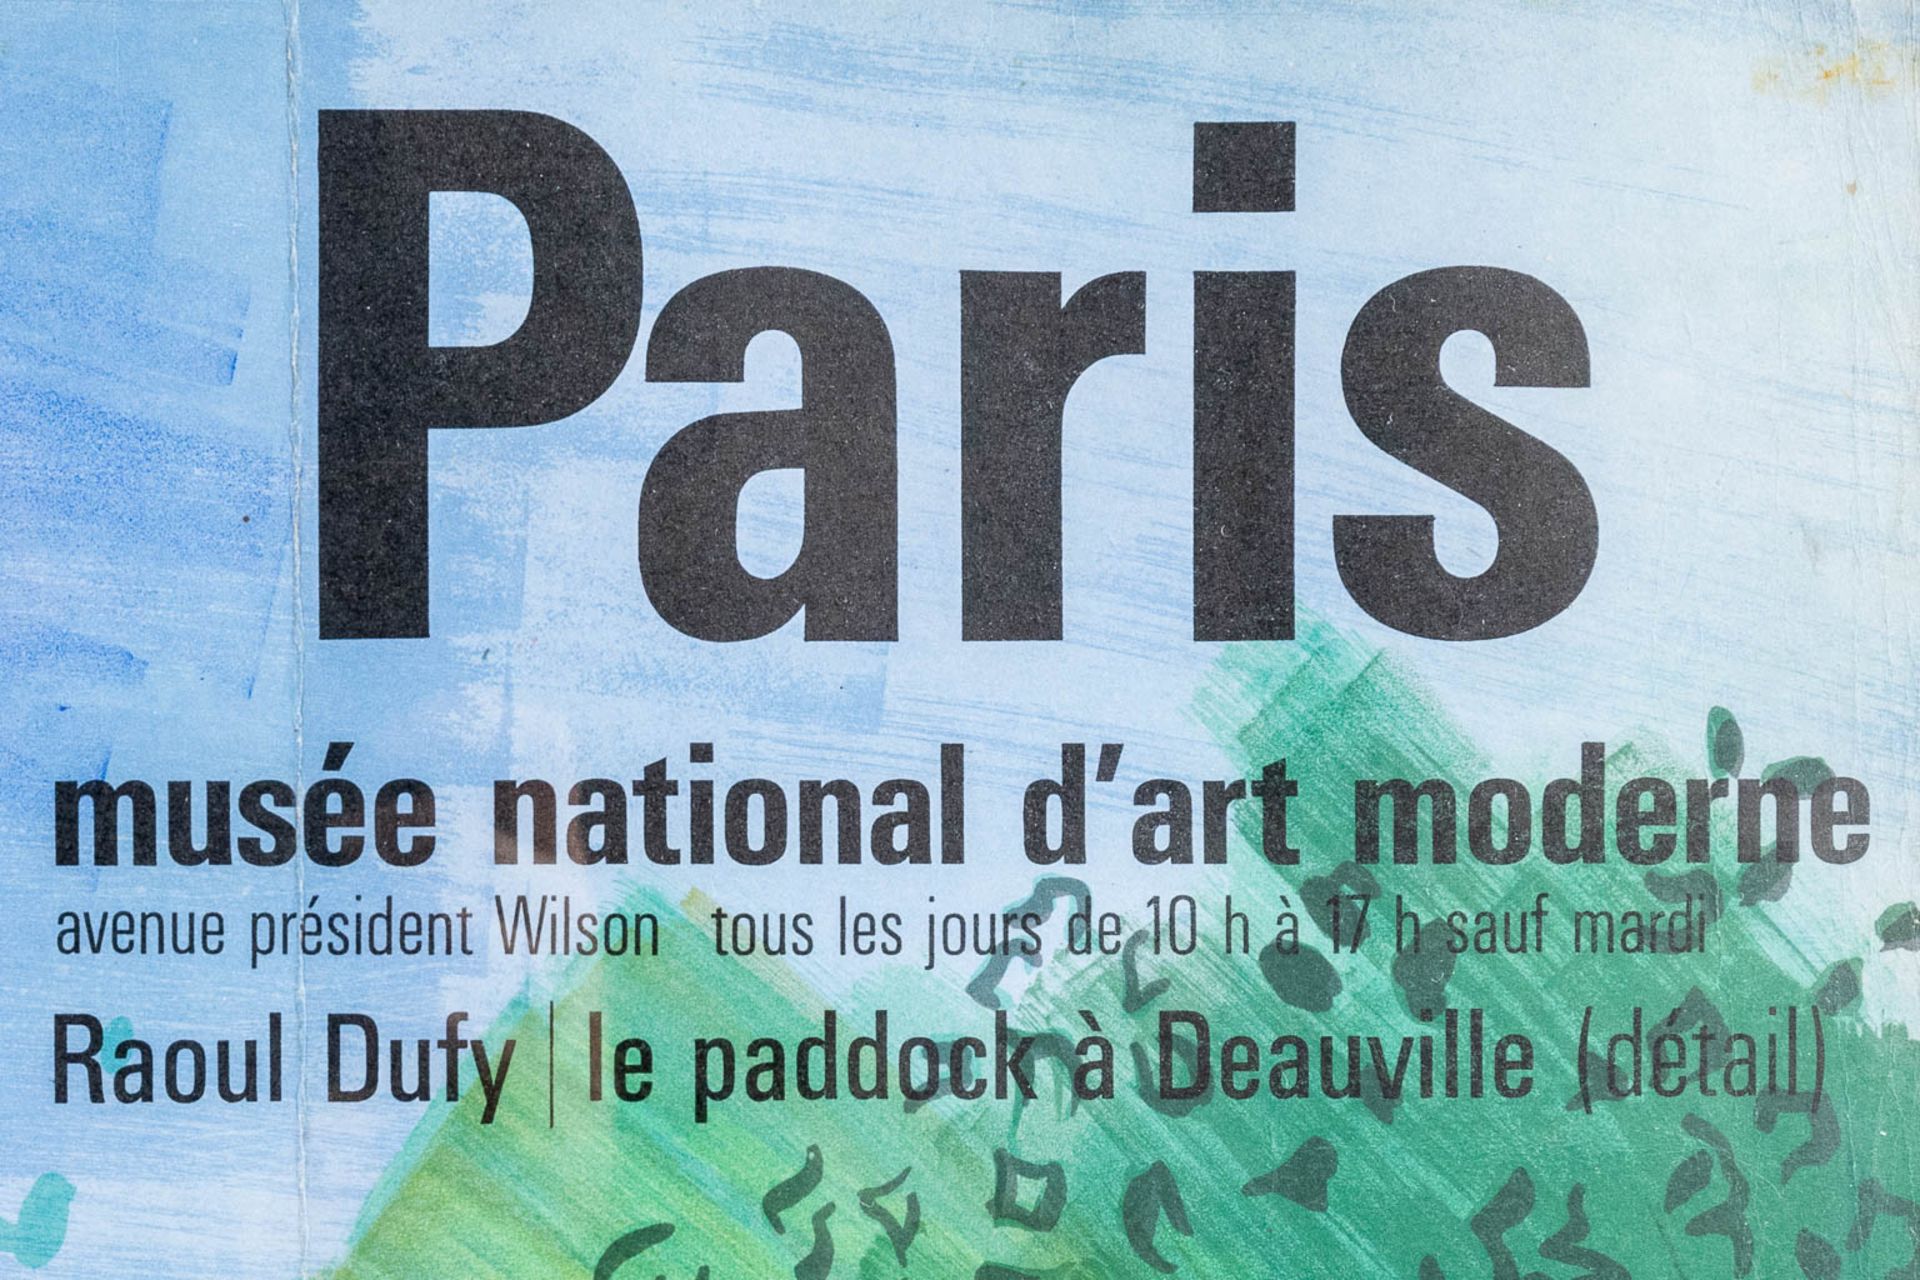 Raoul DUFY (1877-1953) An original framed poster for the MusŽe nationale d'art moderne, Paris.Ê1964 - Image 7 of 8